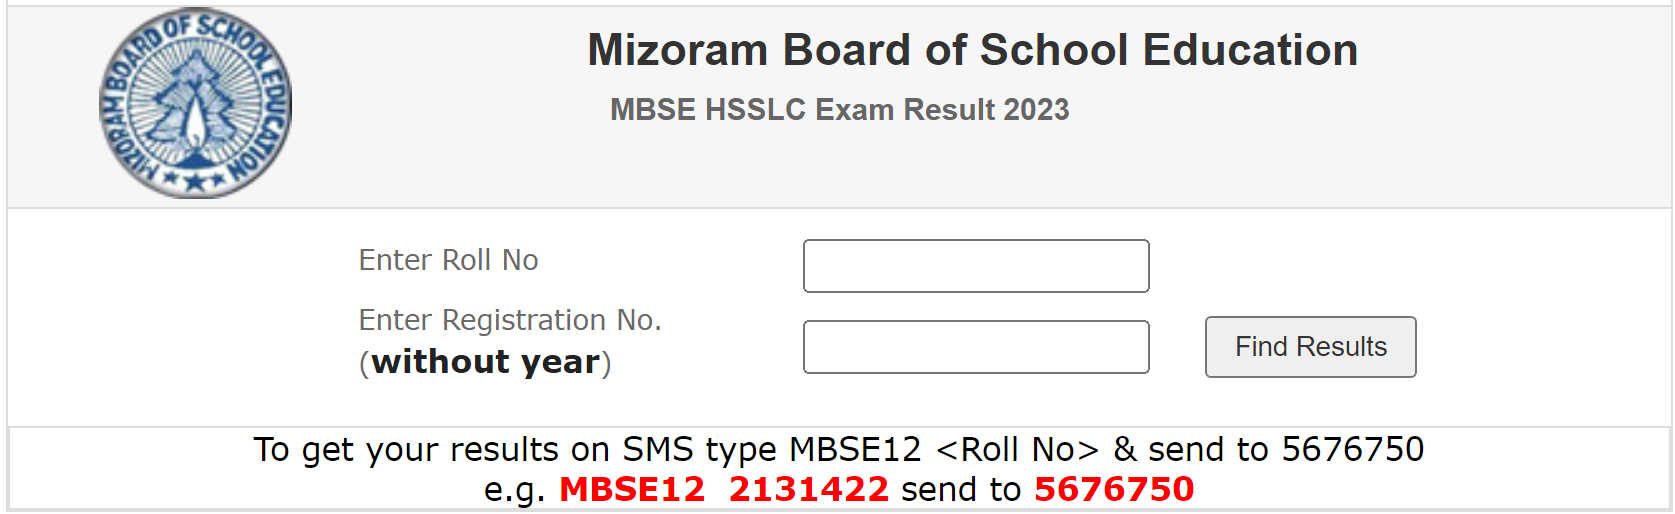 mbse hsslc result 2023 official website